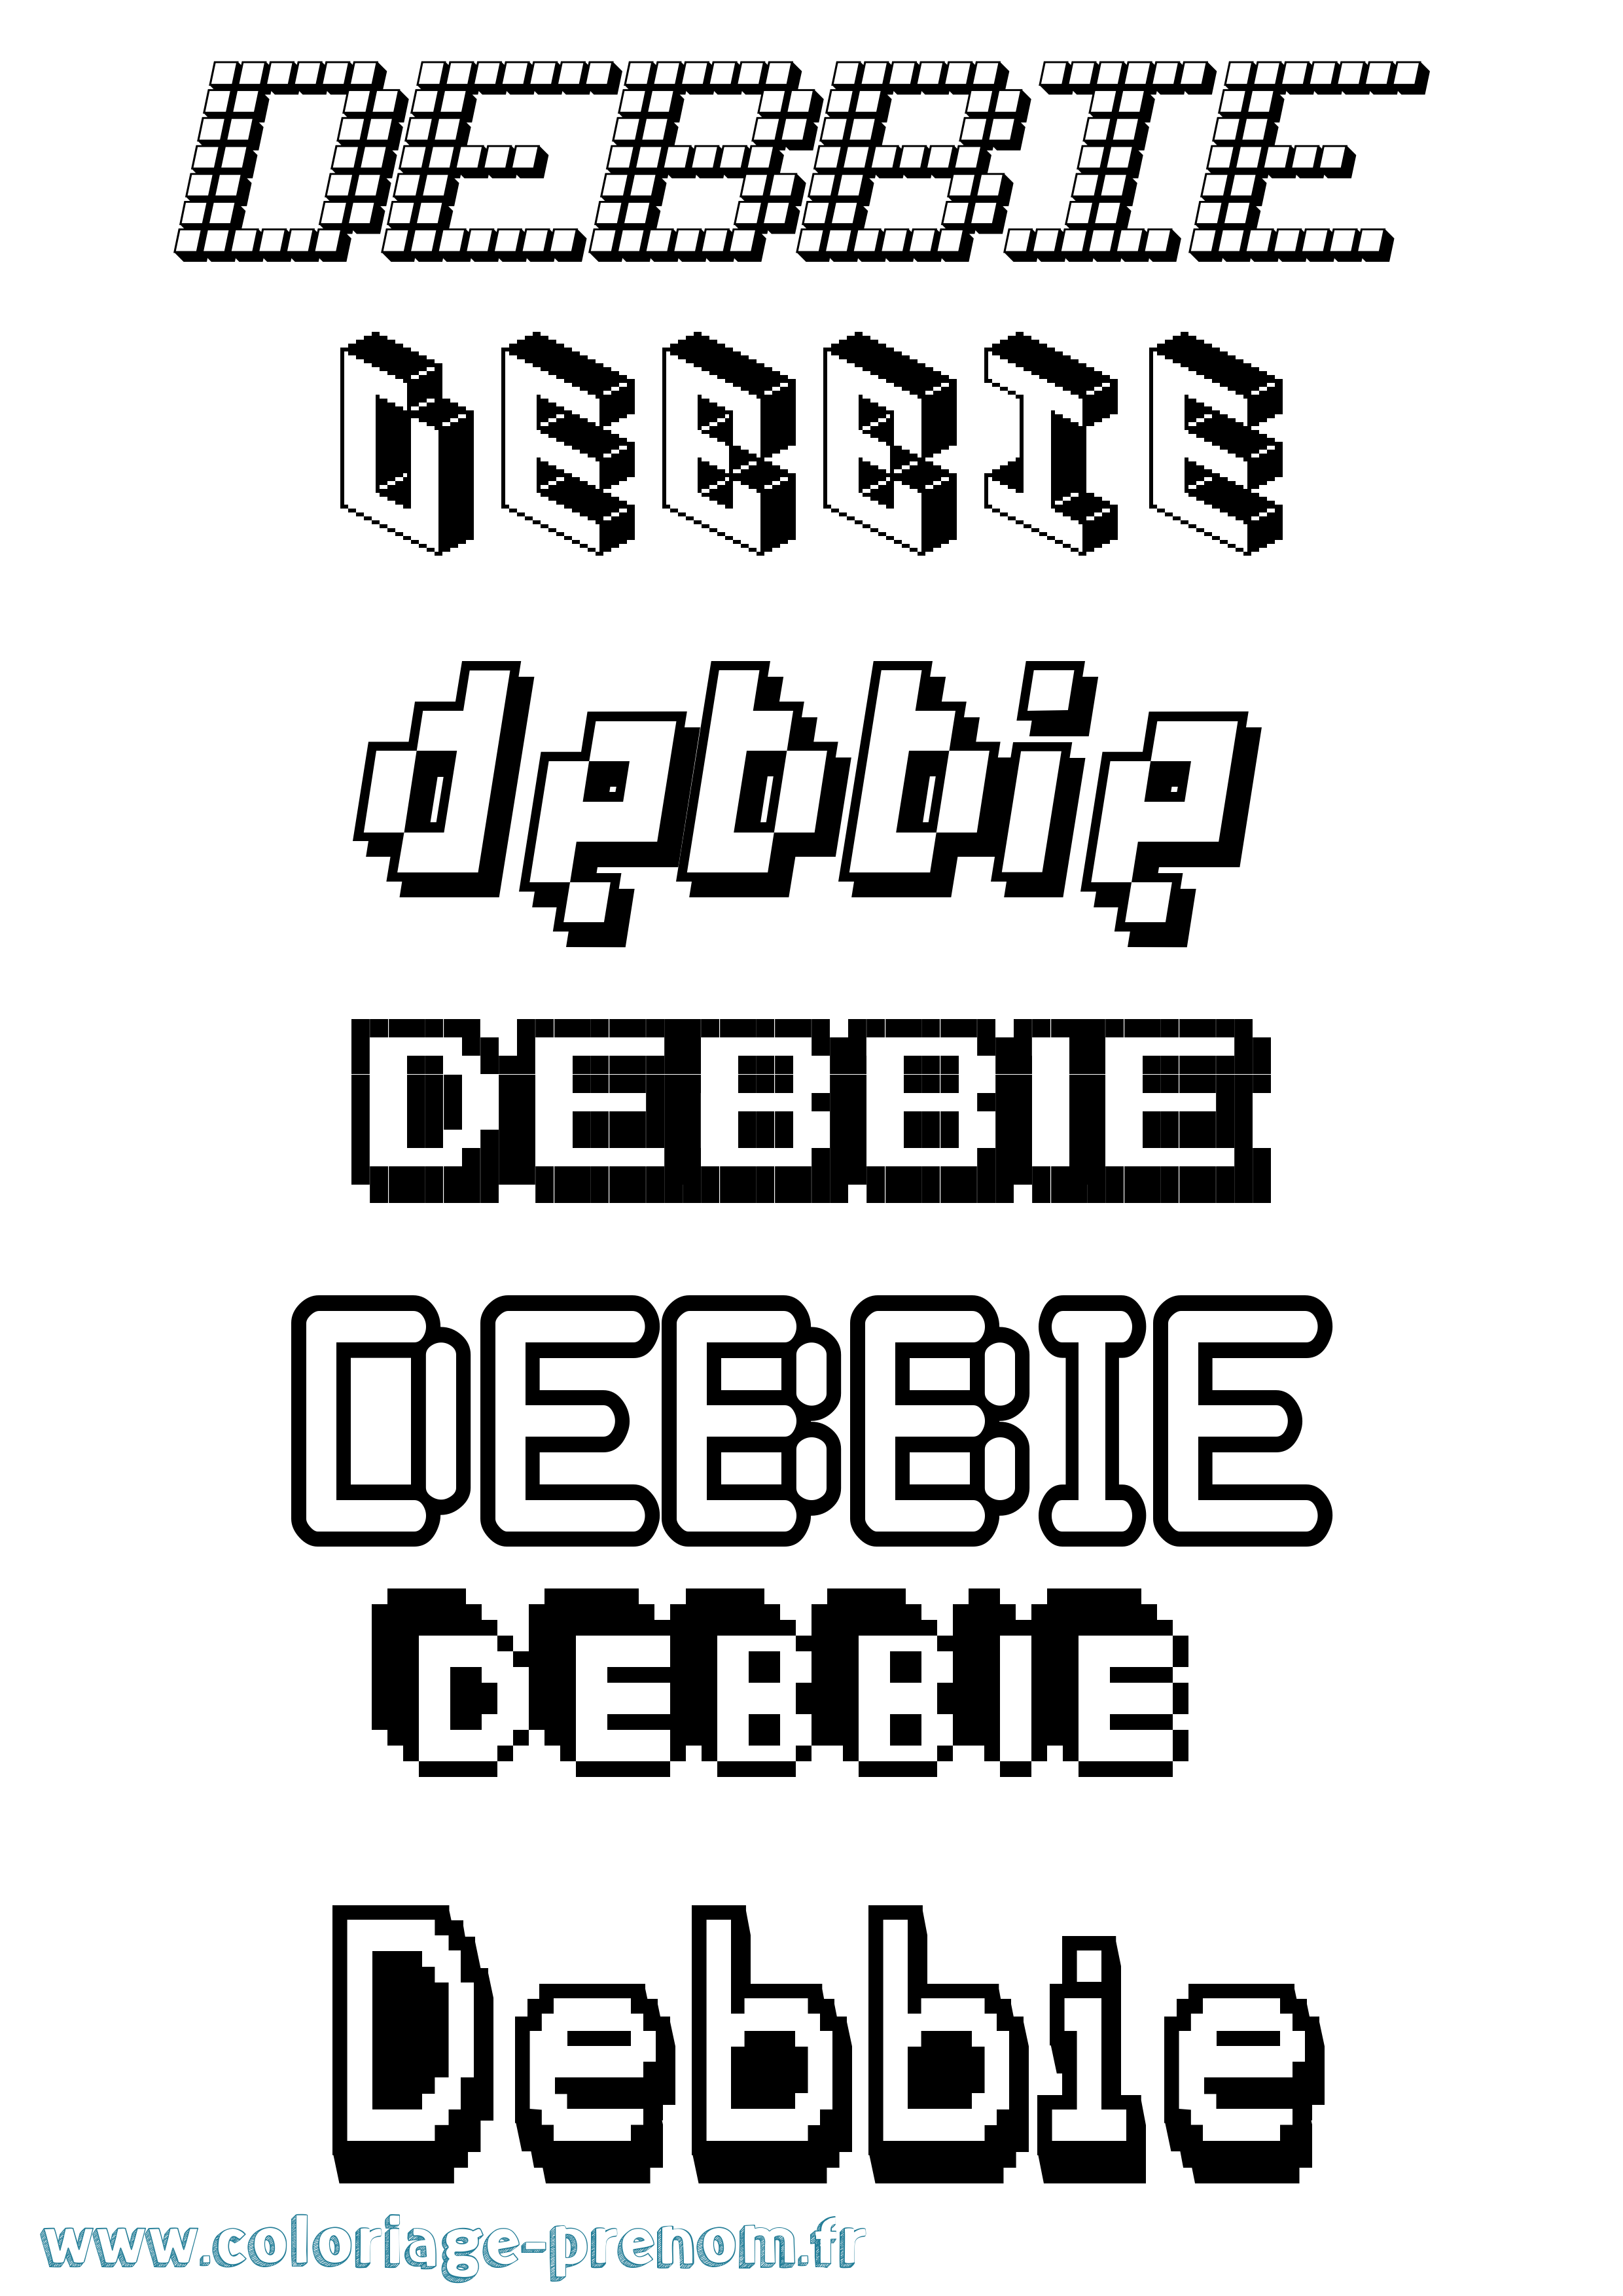 Coloriage prénom Debbie Pixel